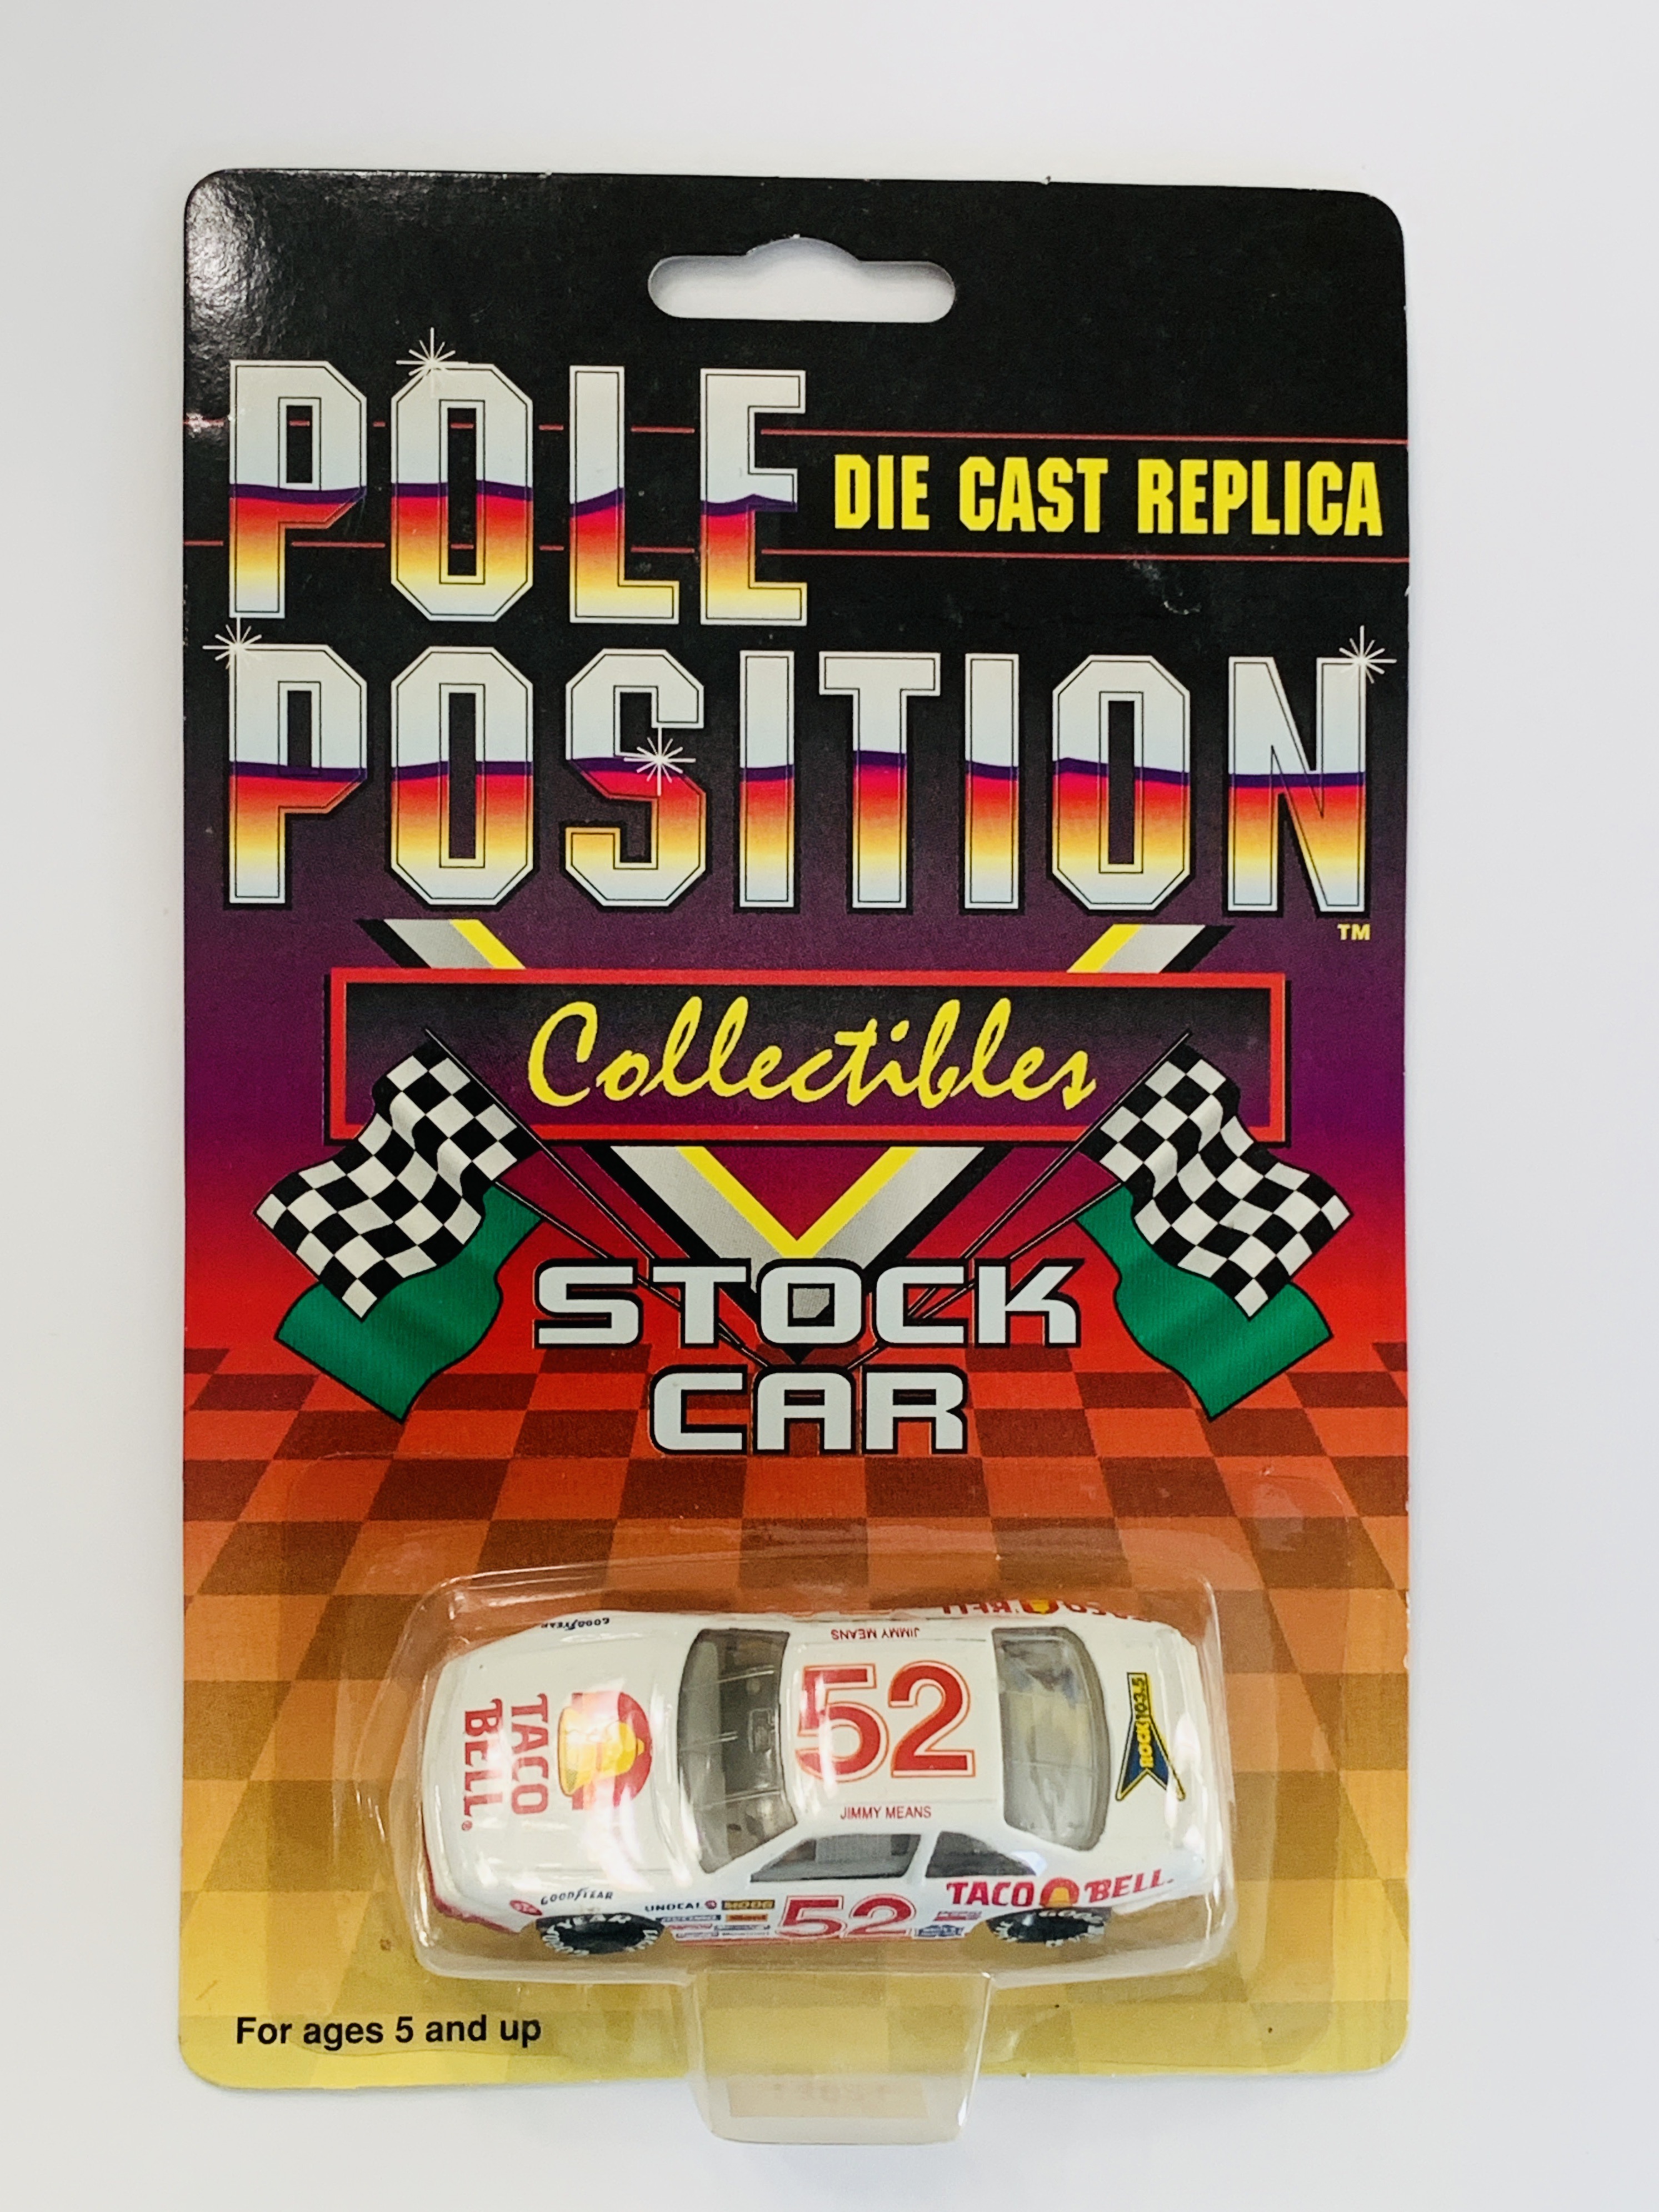 Pole Position Collectibles Taco Bell Stock Car